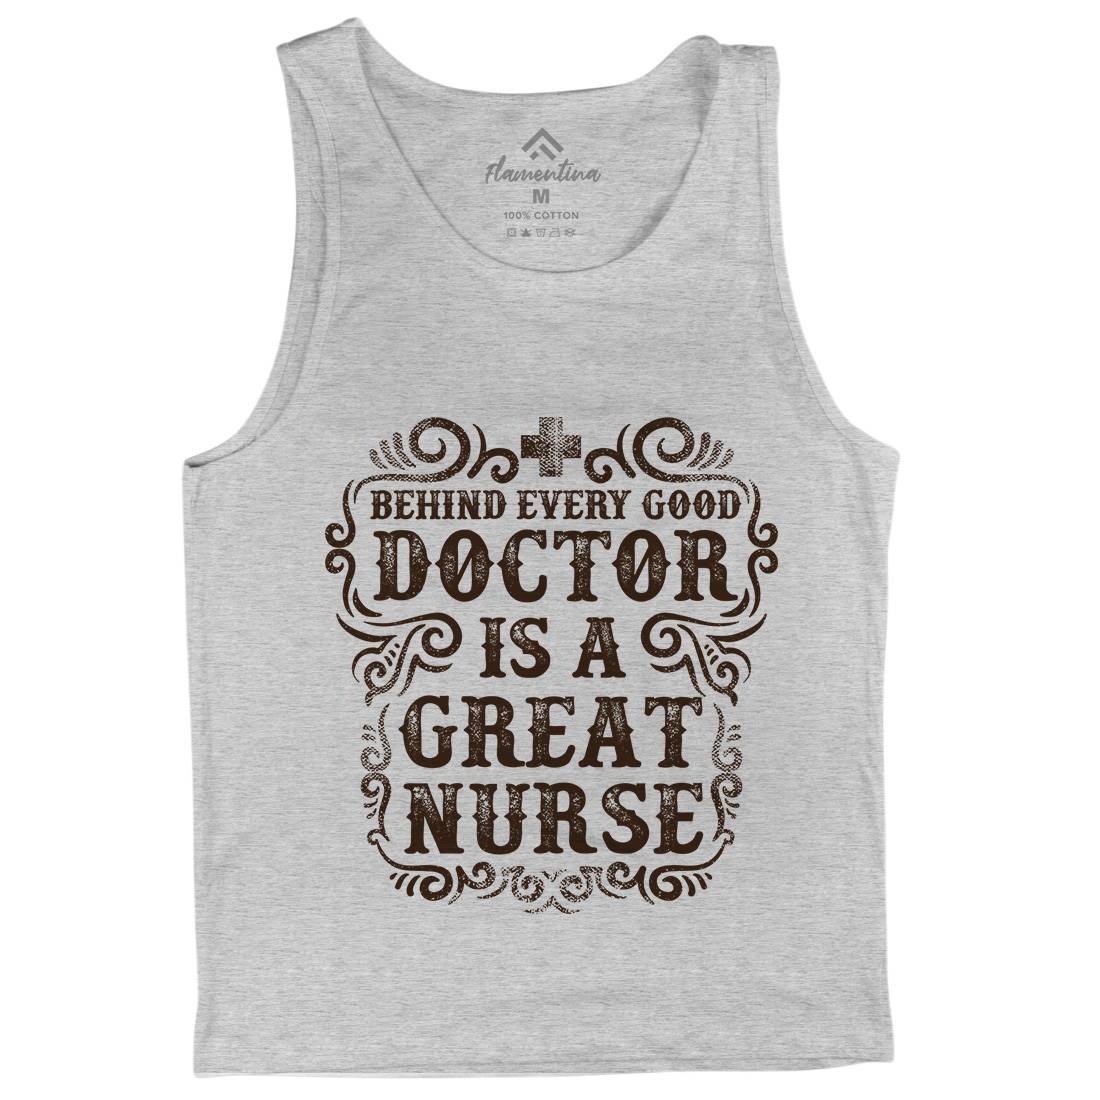 Behind Every Good Doctor Is A Great Nurse Mens Tank Top Vest Work C910